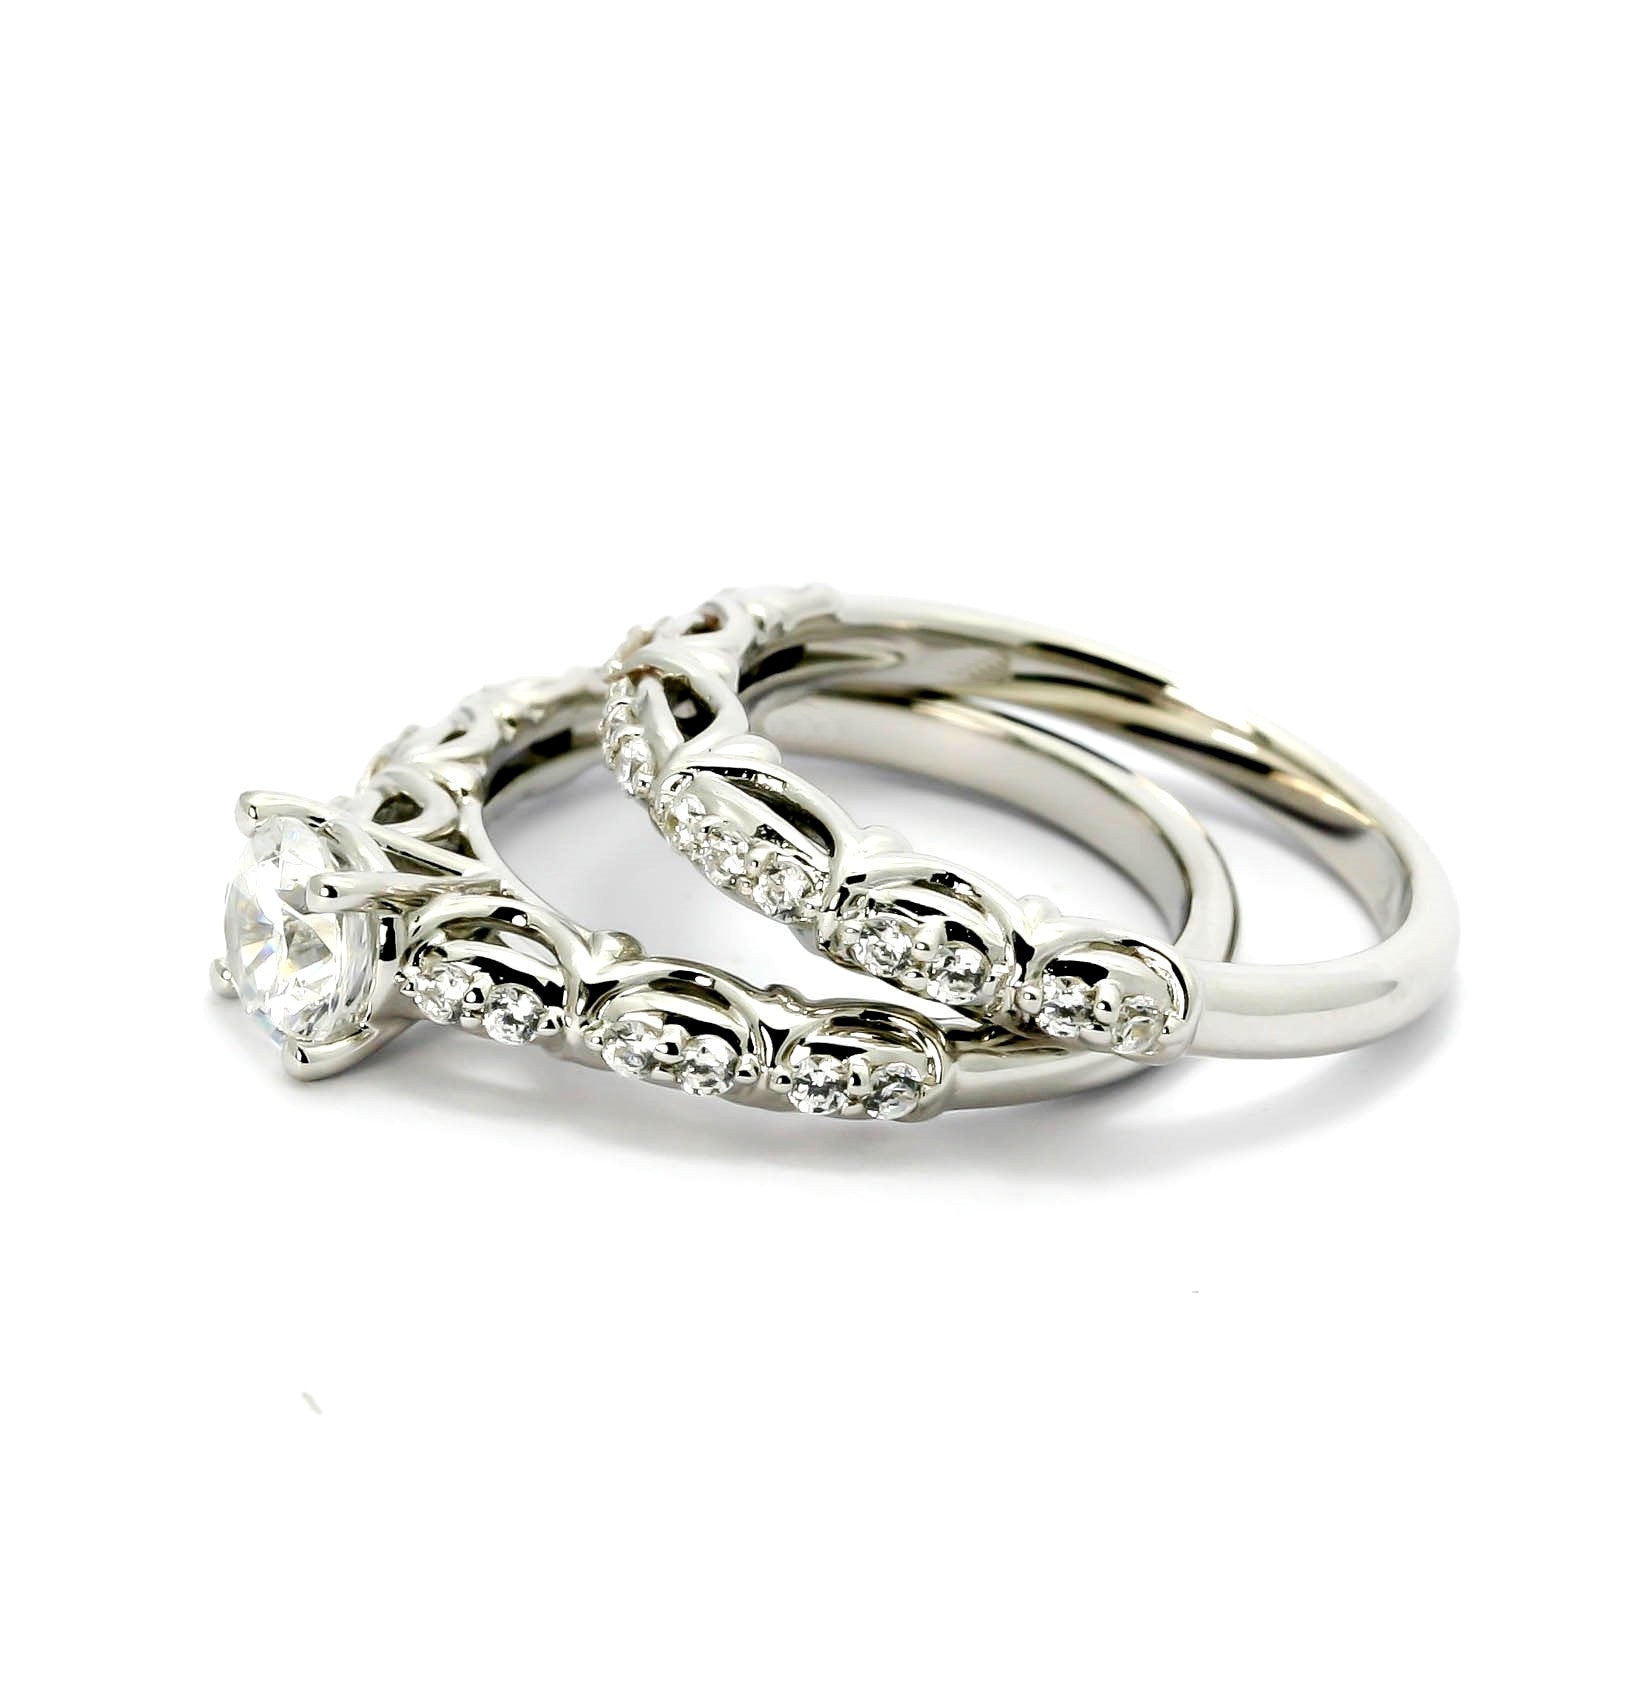 Semi Mount Engagement Ring, Unique Solitaire for 6.5 mm (1 Carat) Center Stone & .16 Carat Diamonds, Anniversary Ring - Y11690SE